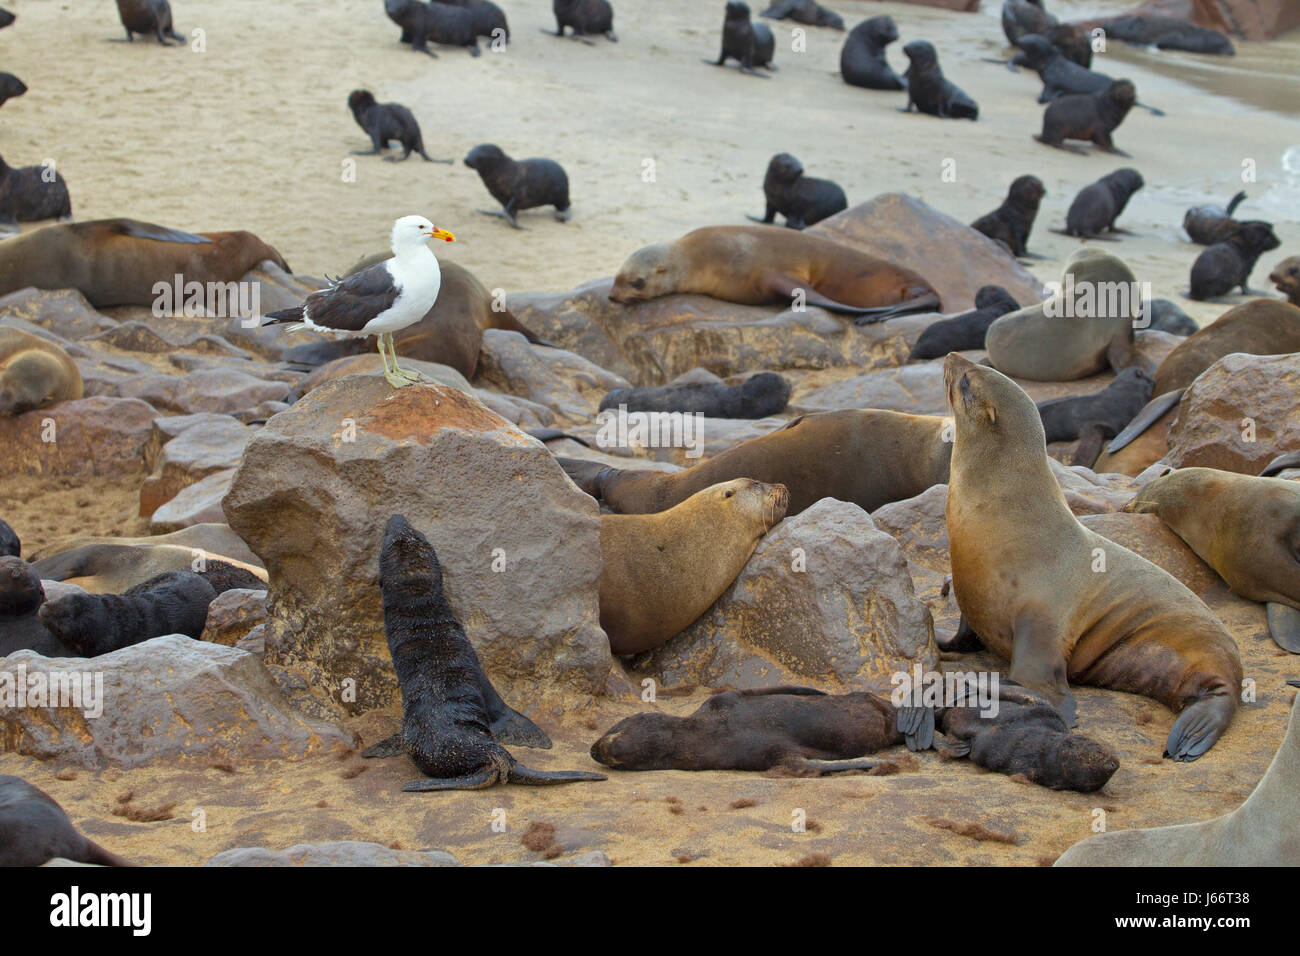 kelp gull larus vetula at Cape Cross Fur Seal colony Stock Photo